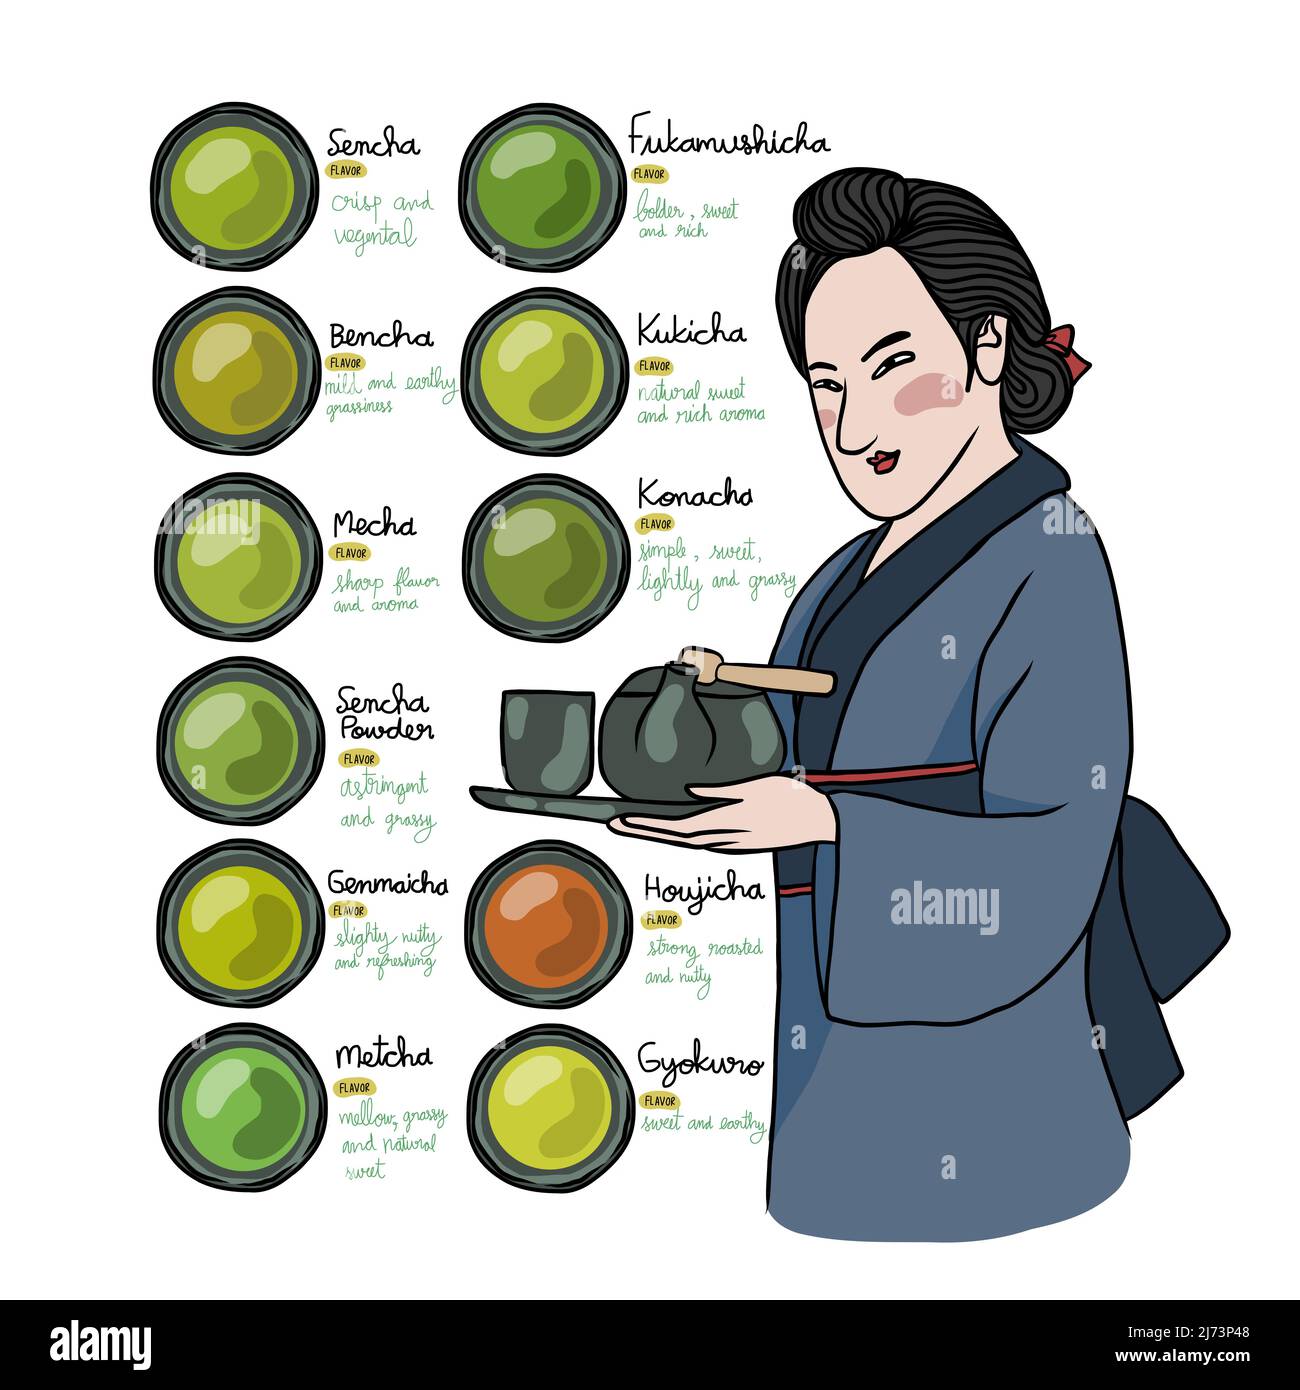 https://c8.alamy.com/comp/2J73P48/types-of-japanese-tea-info-graphic-vector-illustration-2J73P48.jpg